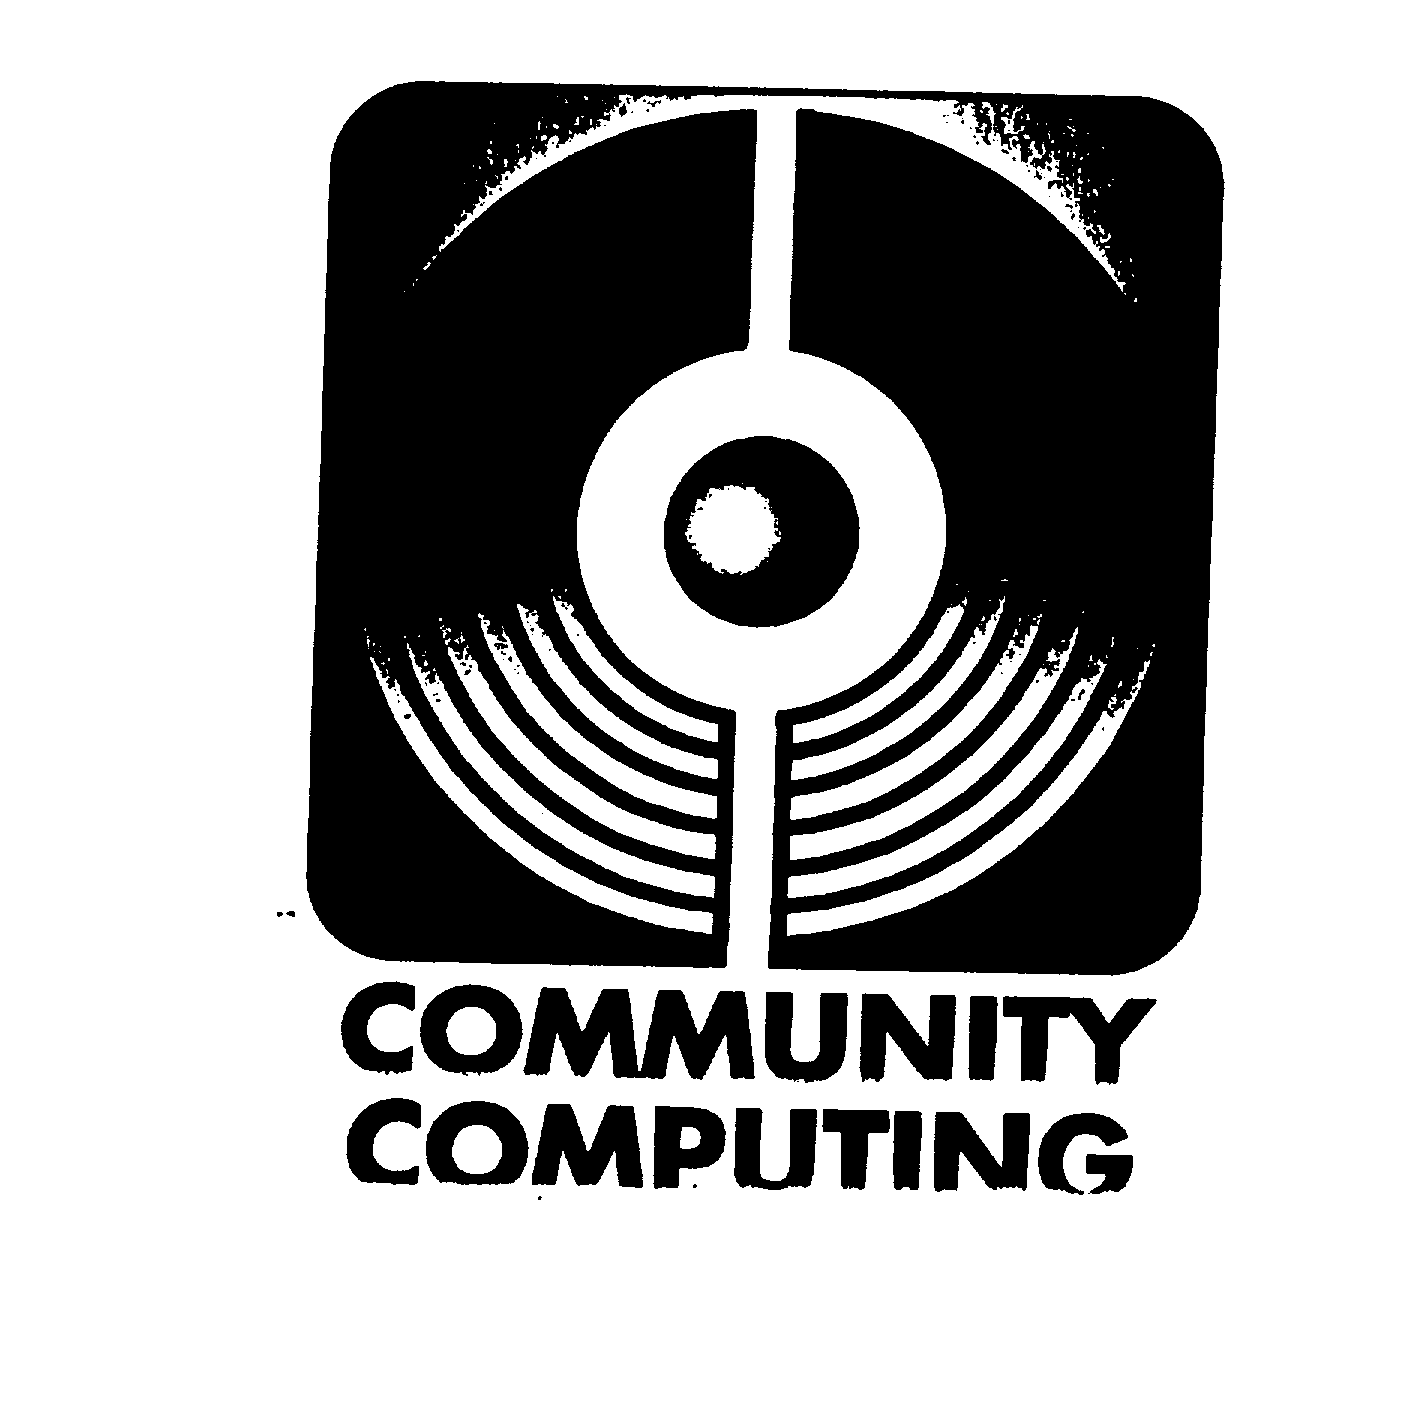 COMMUNITY COMPUTING